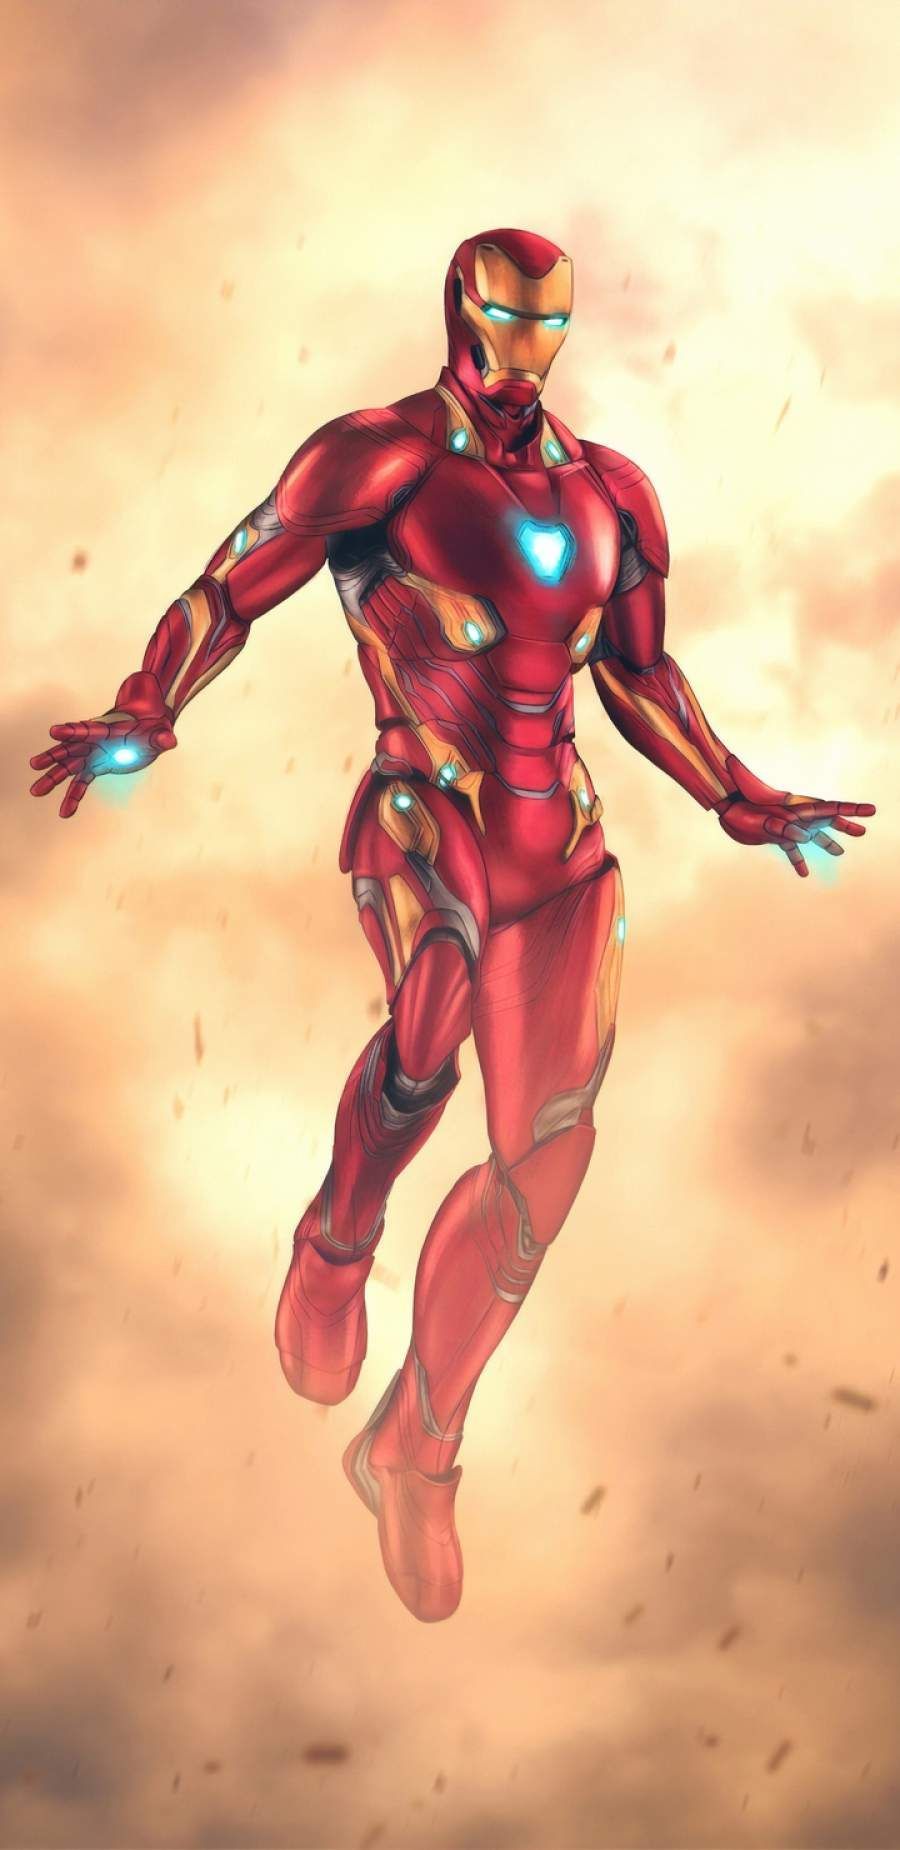 Iron Man 4k Art iPhone Wallpaper. Iron man art, Iron man